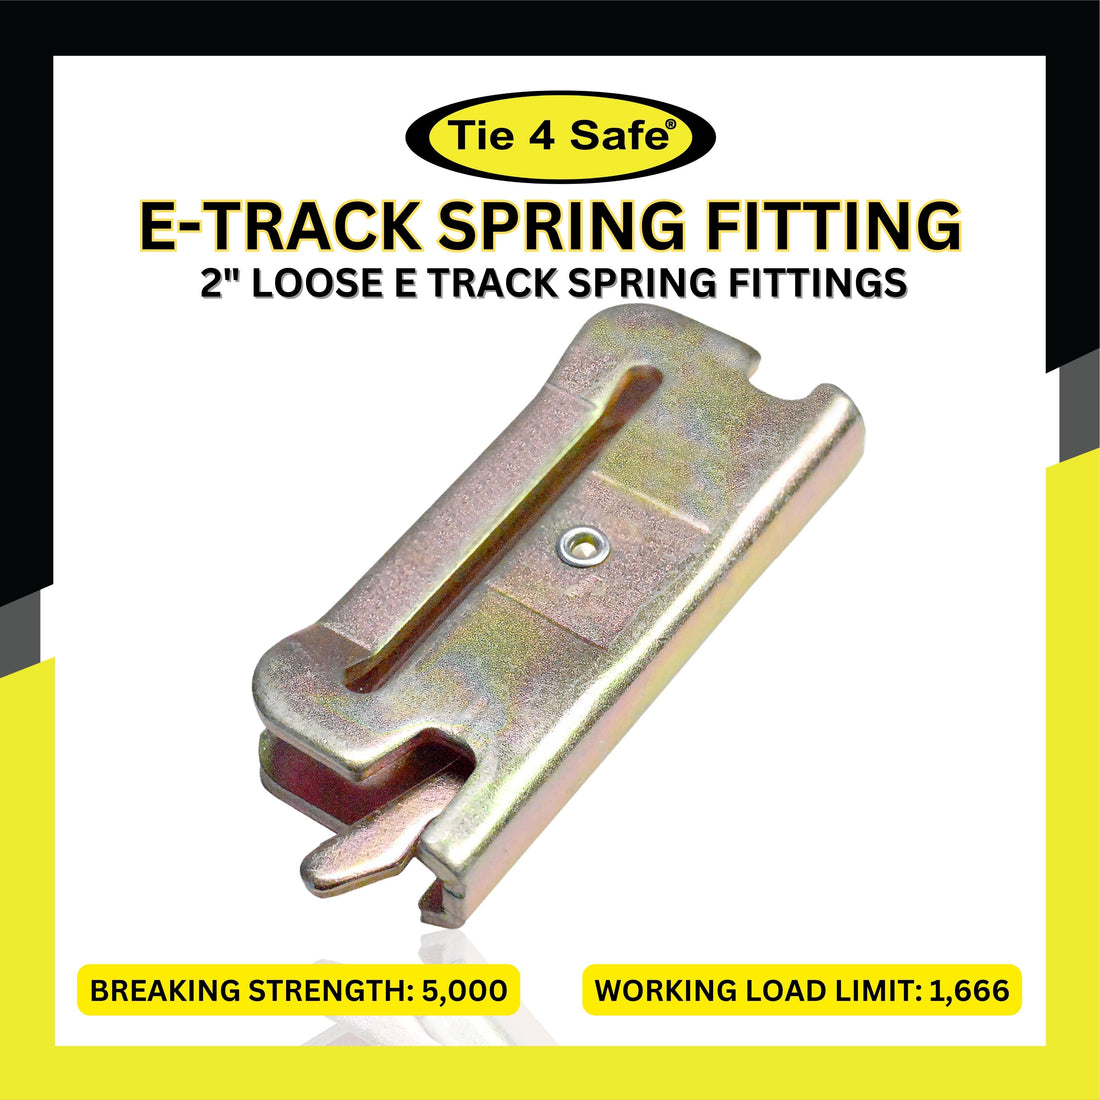 E-Track Spring Fitting